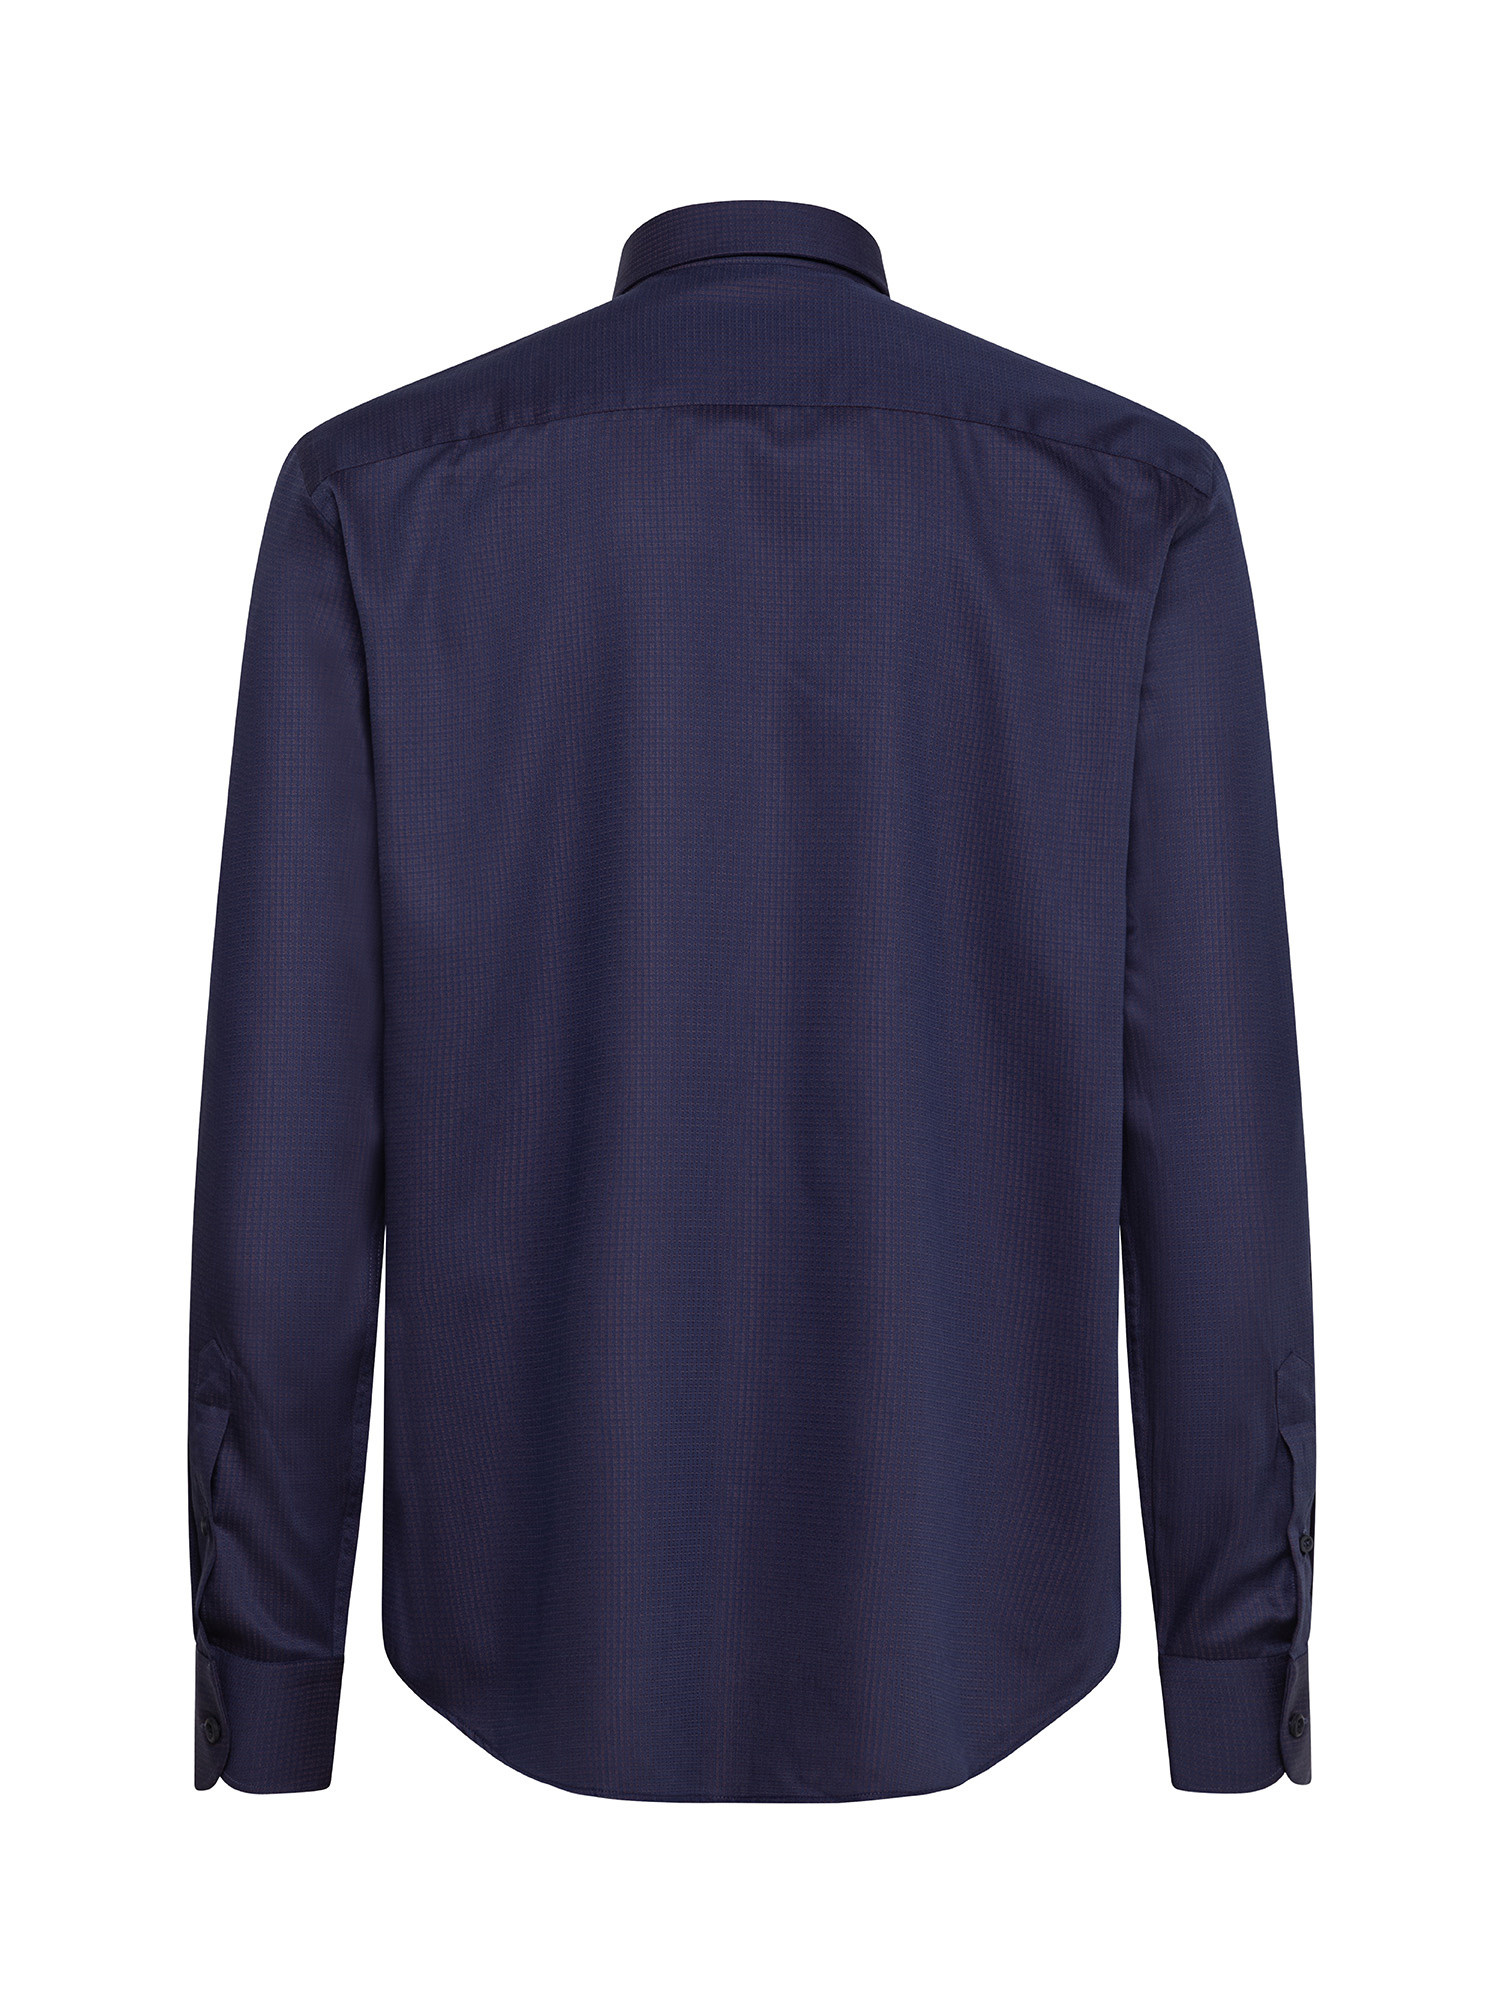 Luca D'Altieri - Tailor fit shirt in pure cotton, Blue 2, large image number 2